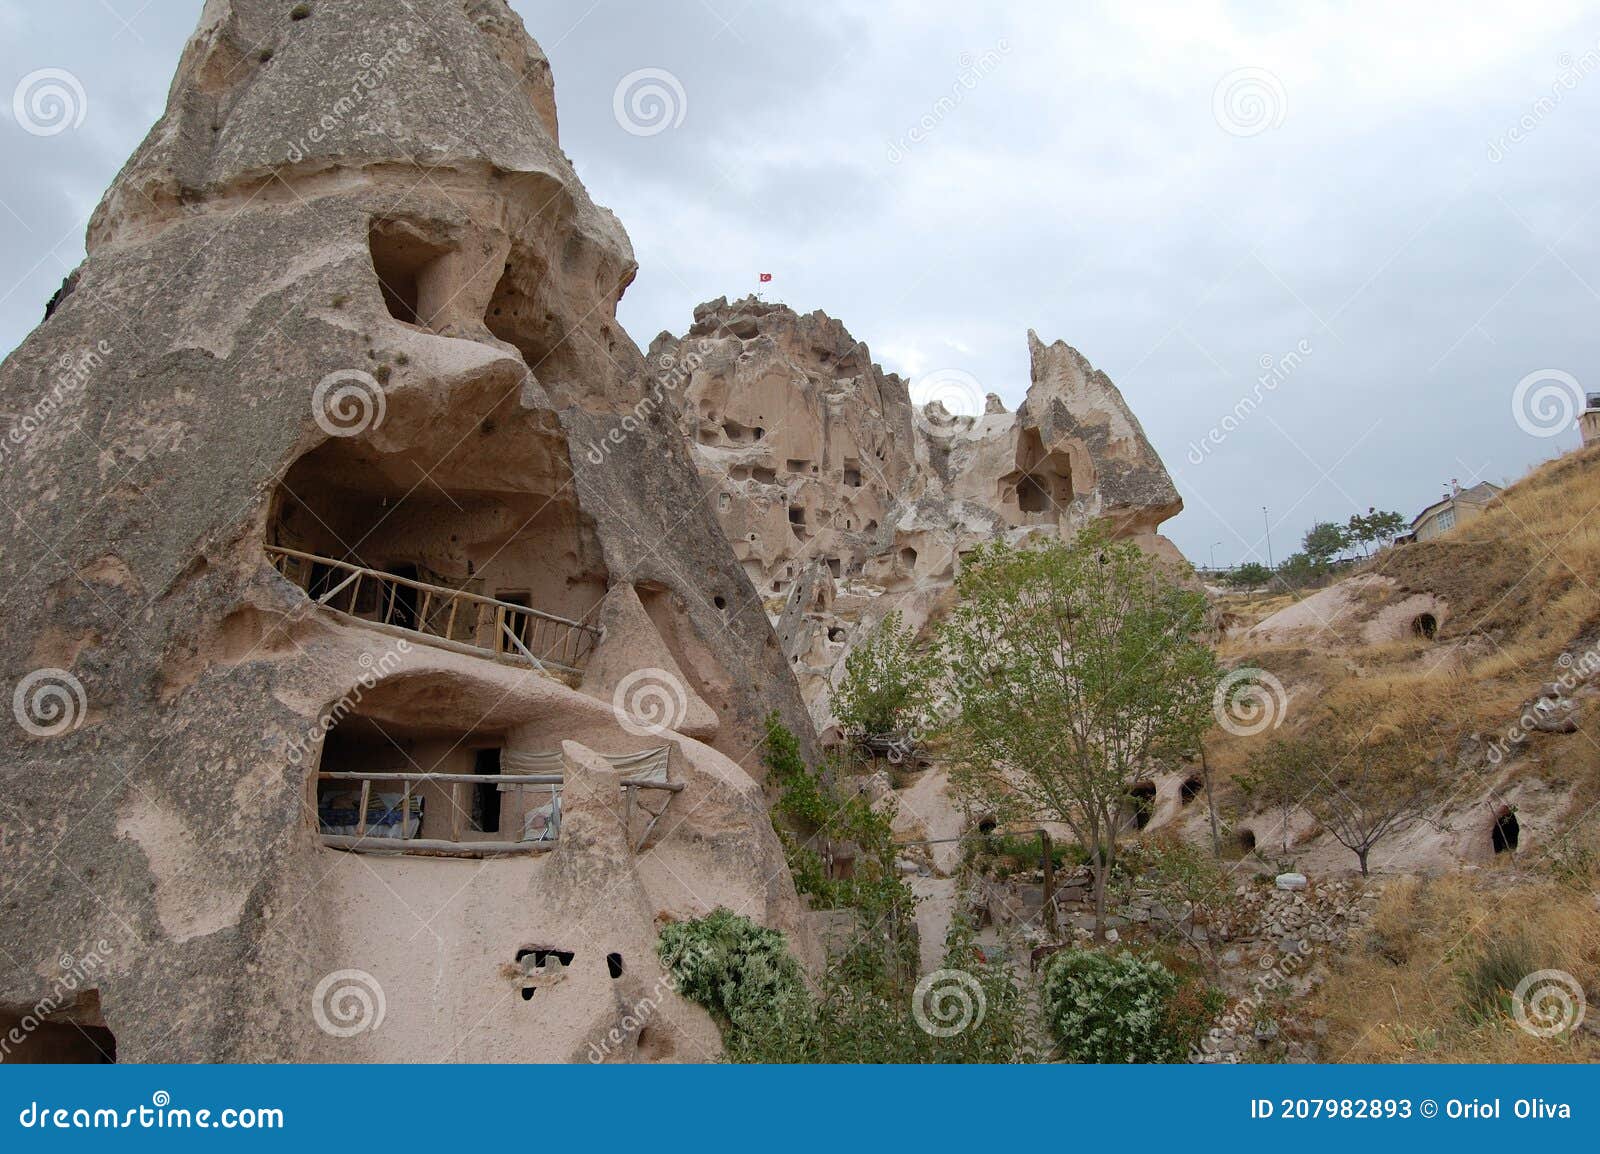 troglodyte village of uchisar (cappadocia turkey). central anatolia.